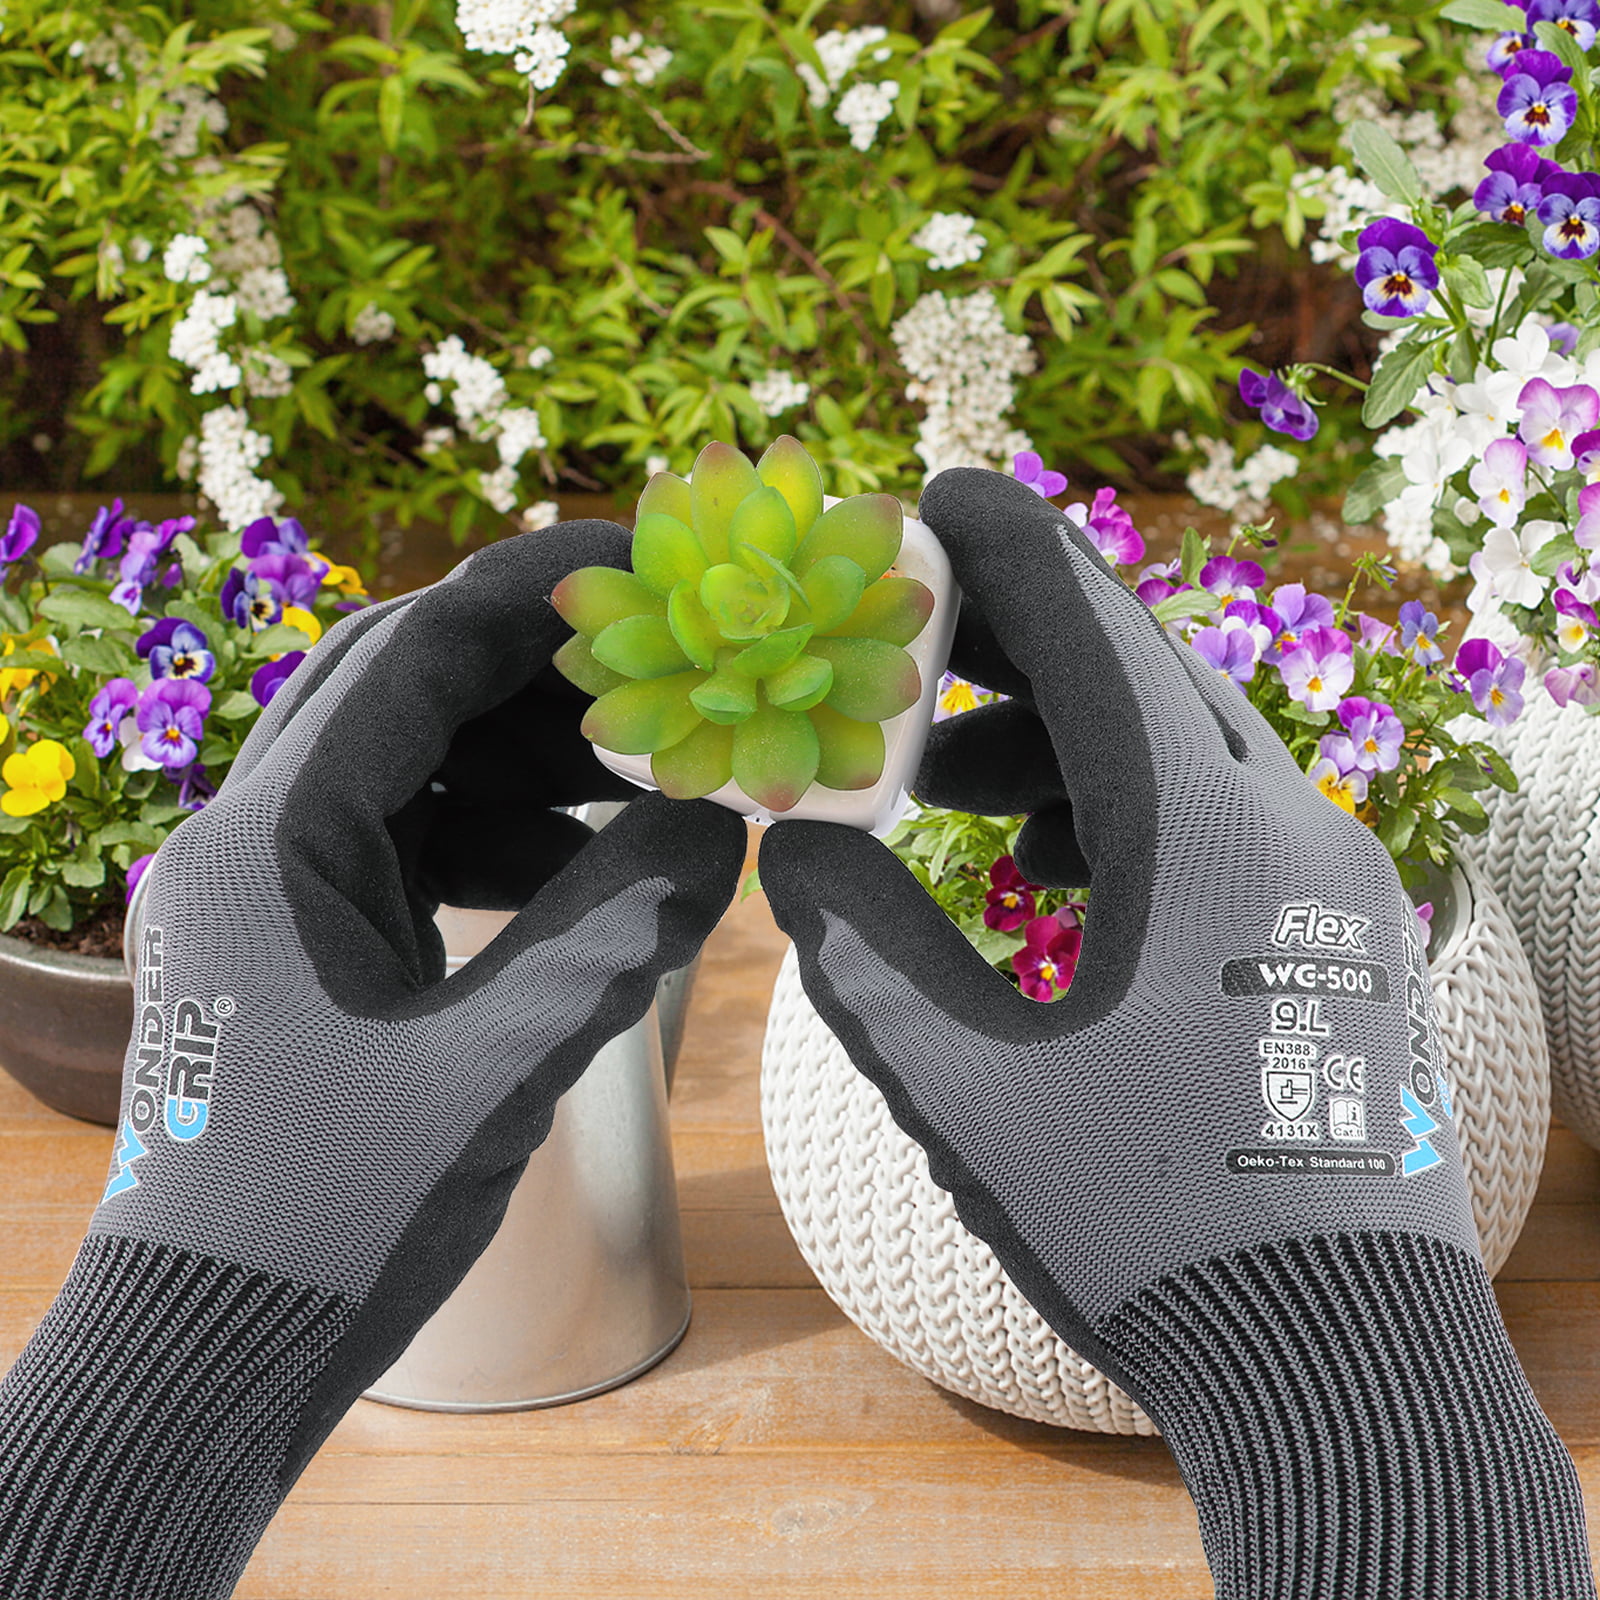 12x Pu Coated Gloves Gardening Work Builders Safety Nylon Black Mechanic Grip 